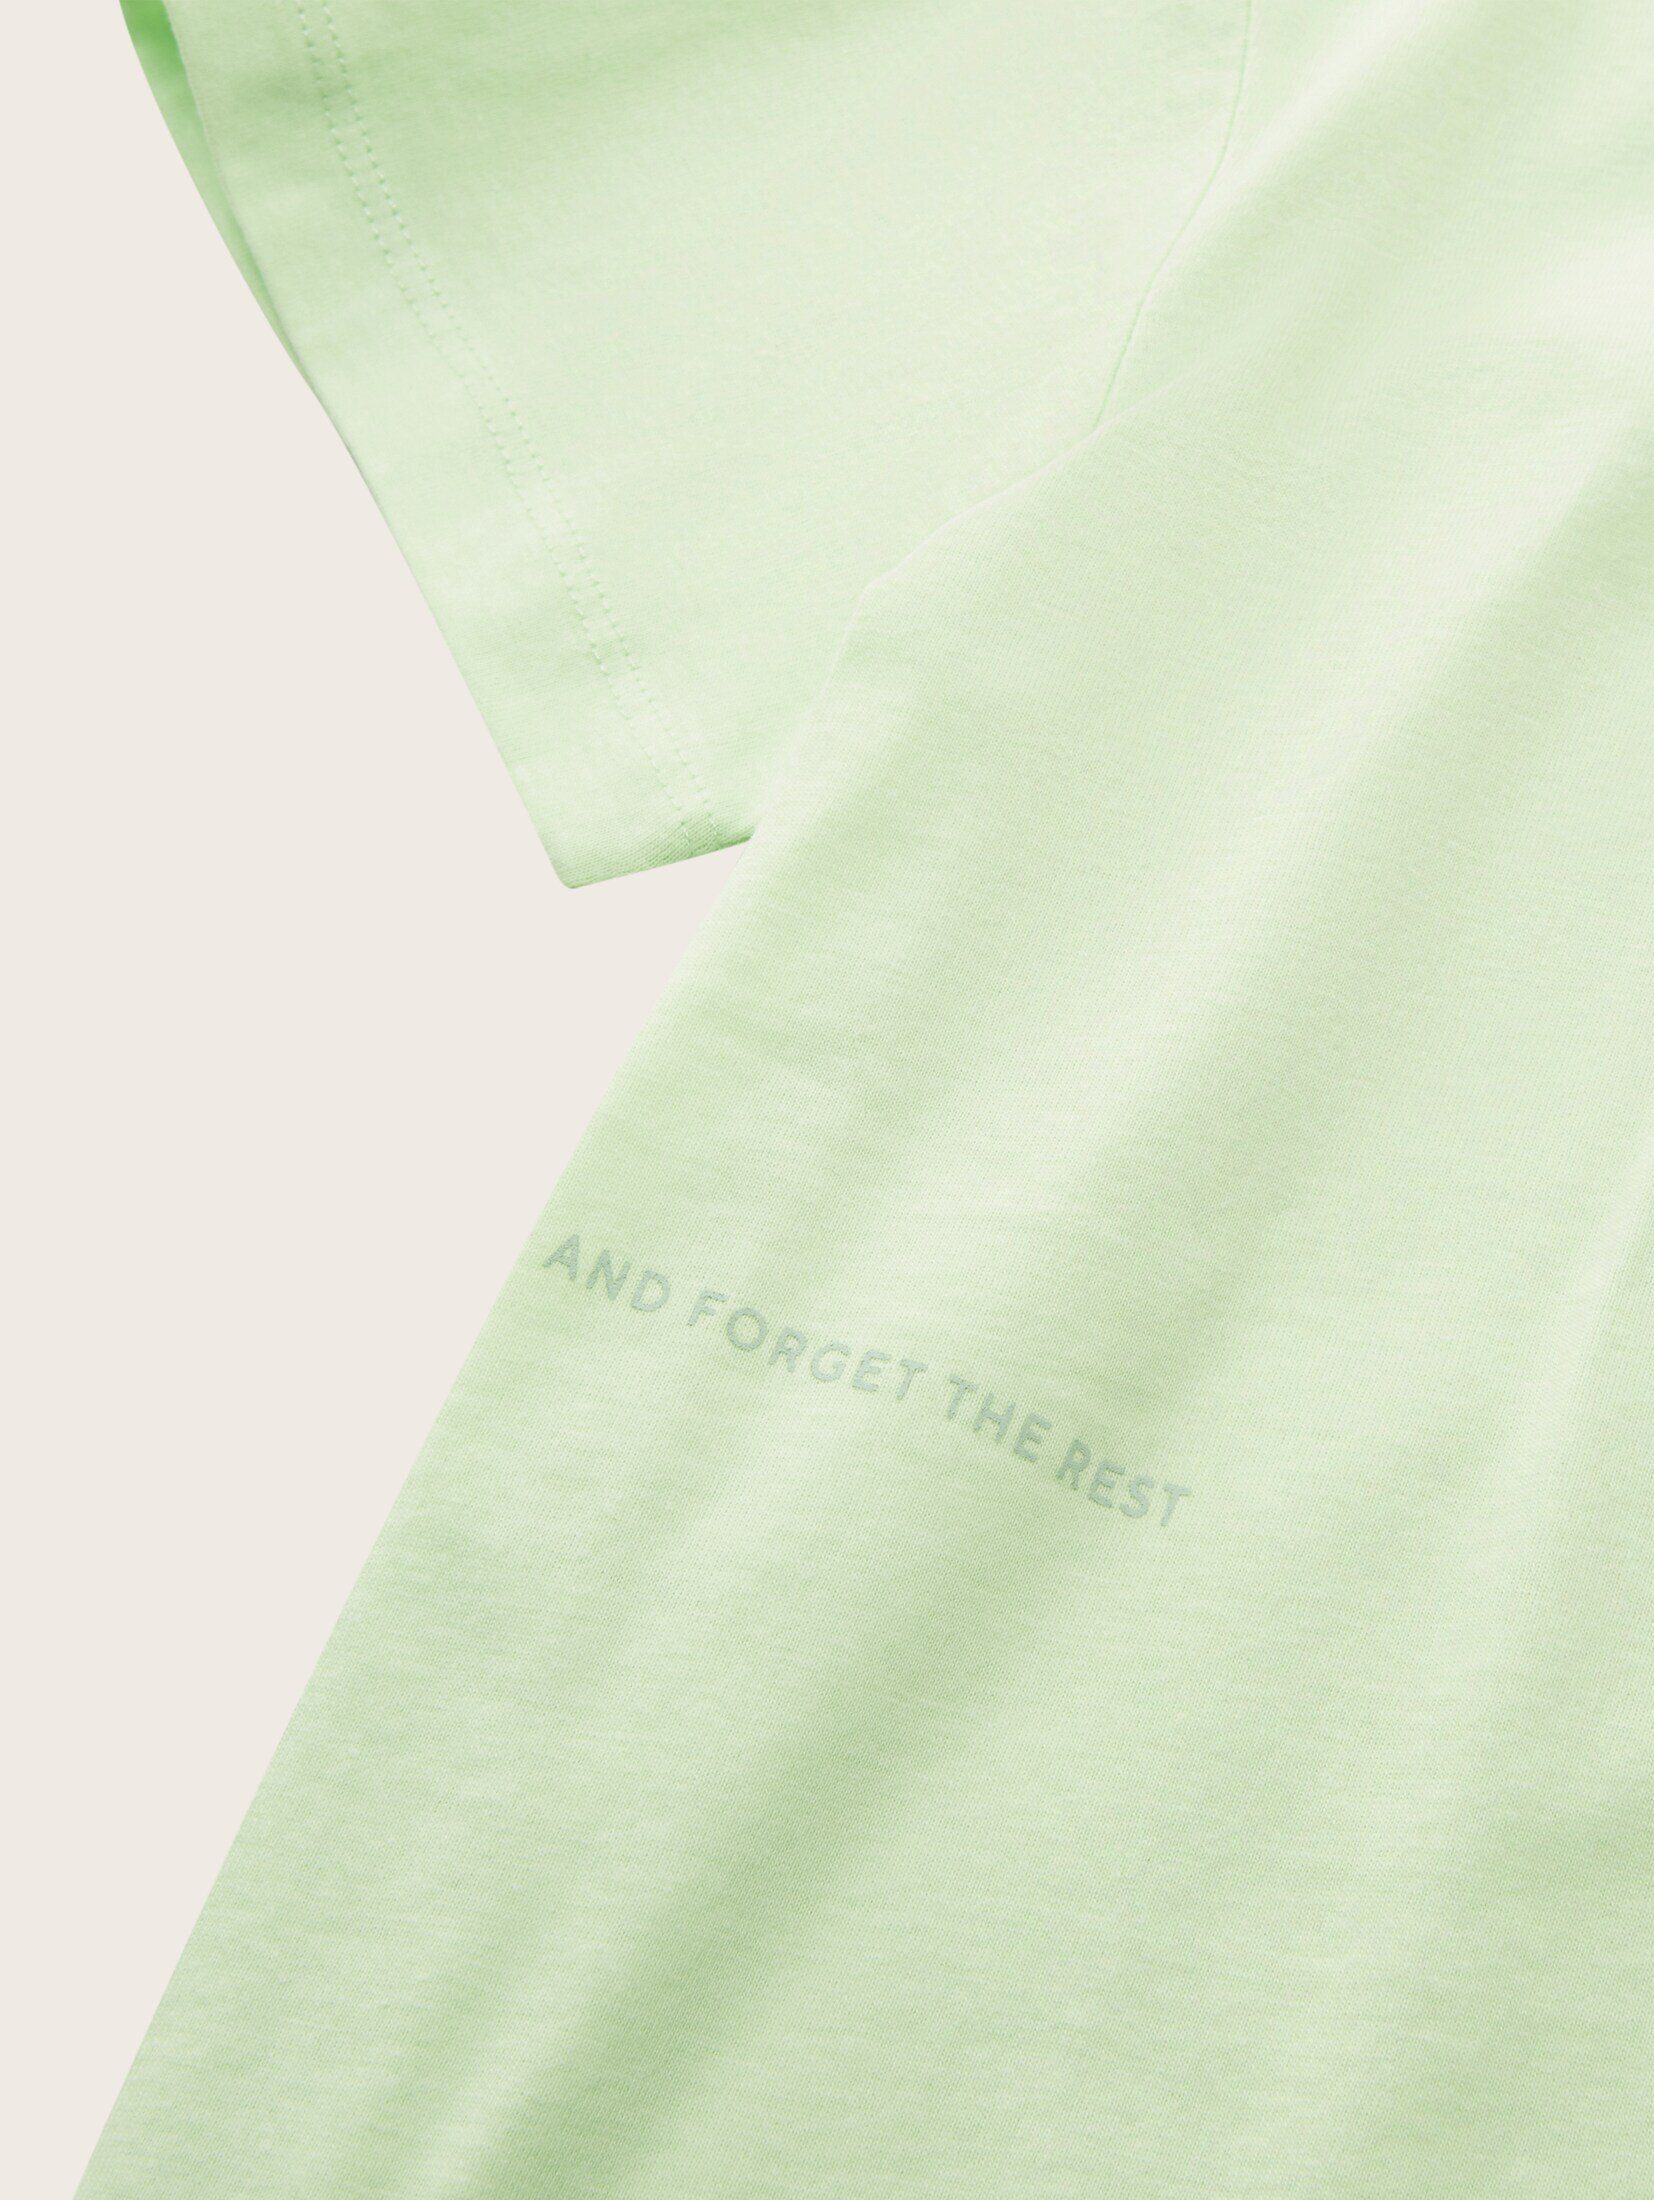 green Textprint TAILOR T-Shirt T-Shirt apple TOM mit fresh lime